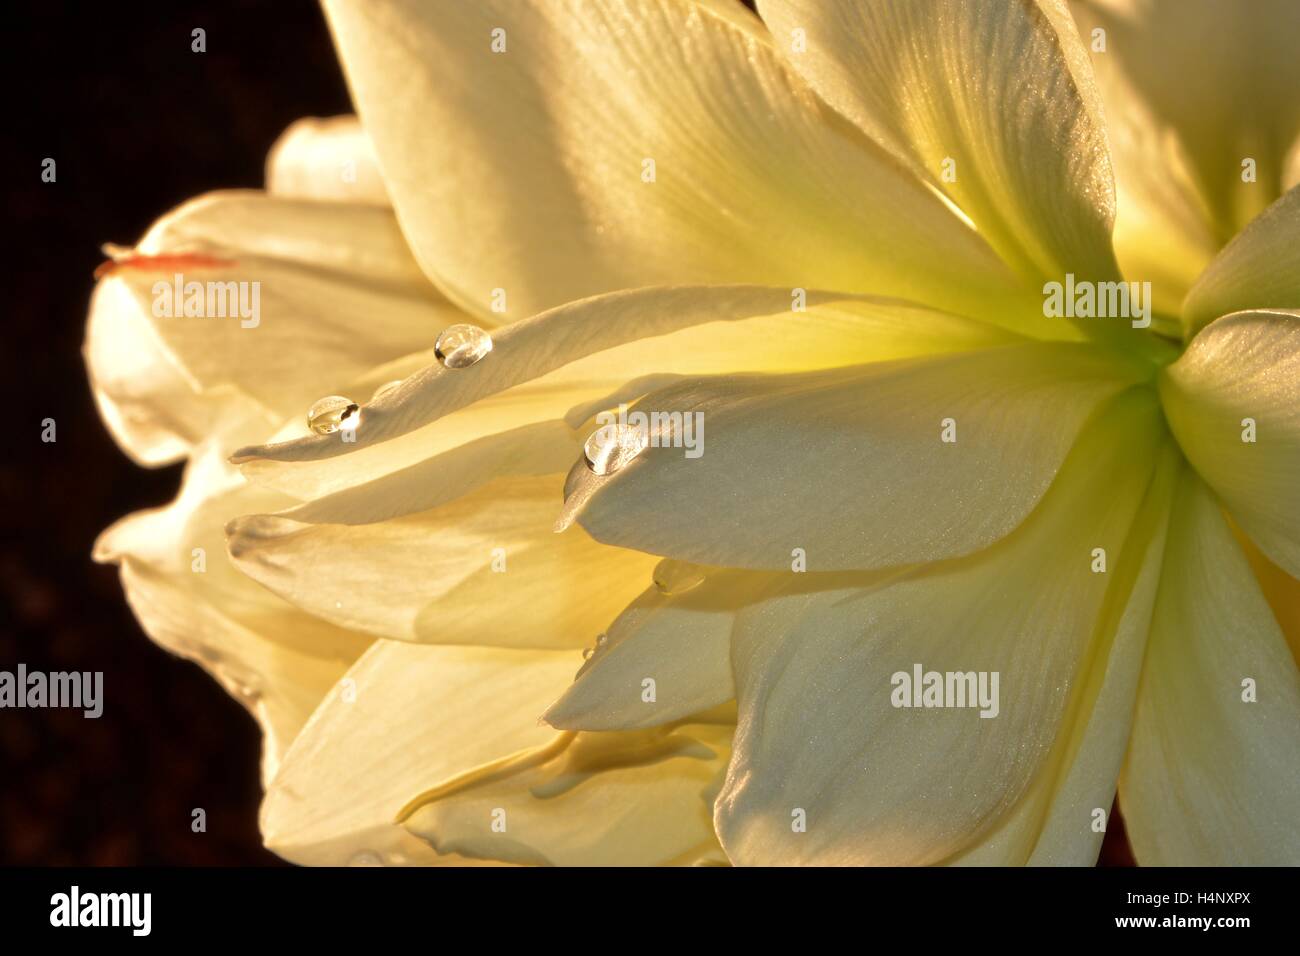 Brillantes flores Amarilis con gotas de agua en detalle Foto de stock